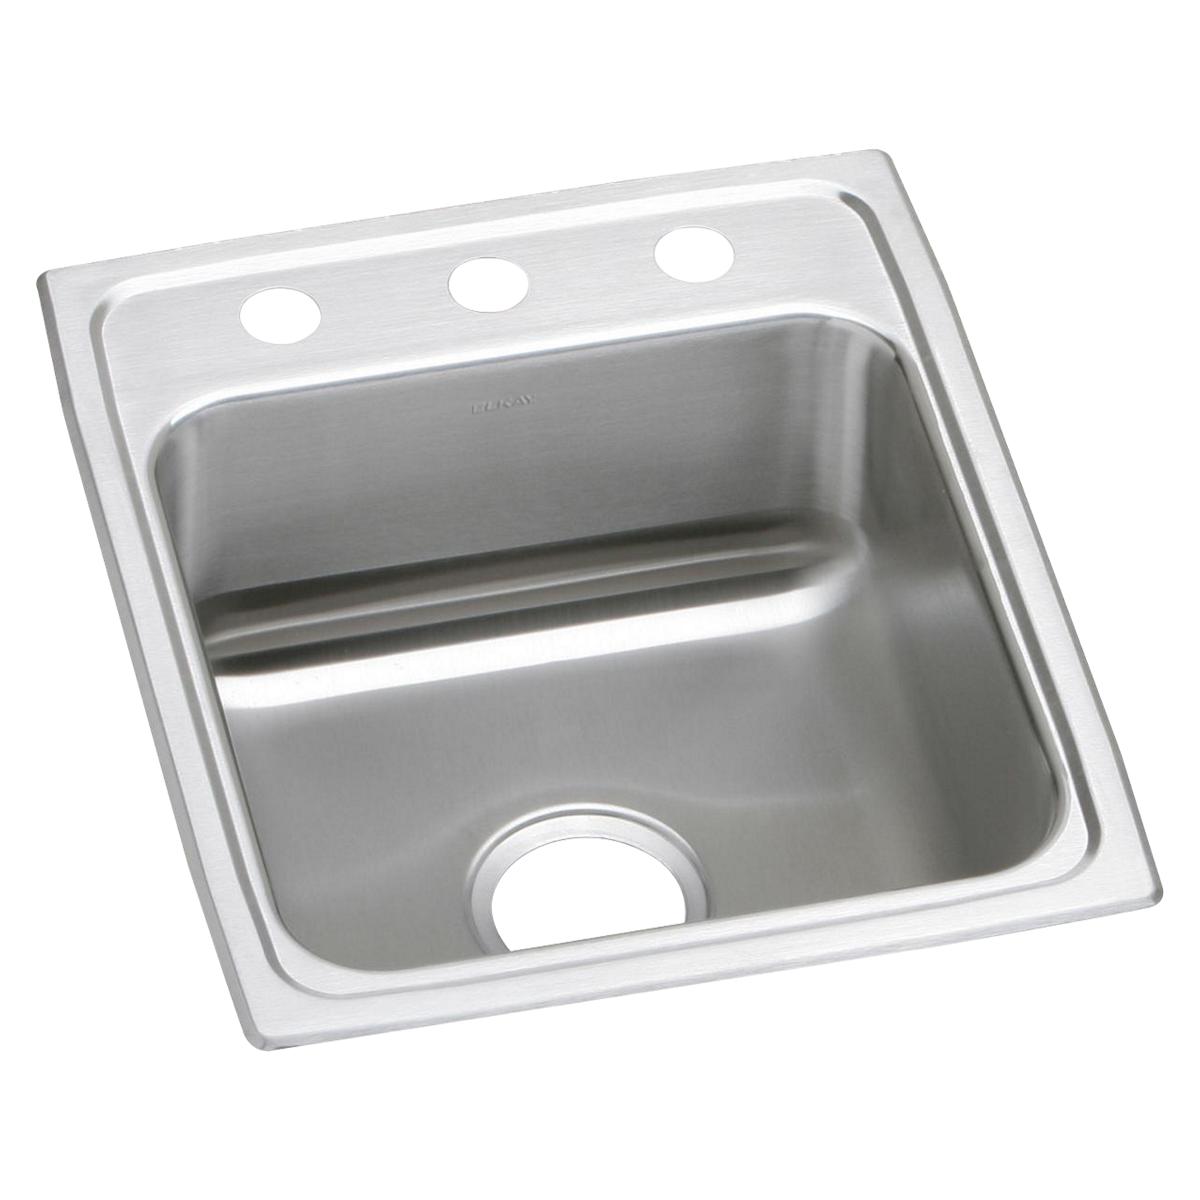 Elkay Lustertone Classic 17" x 20" x 4" OS4-Hole Single Bowl Drop-in ADA Sink